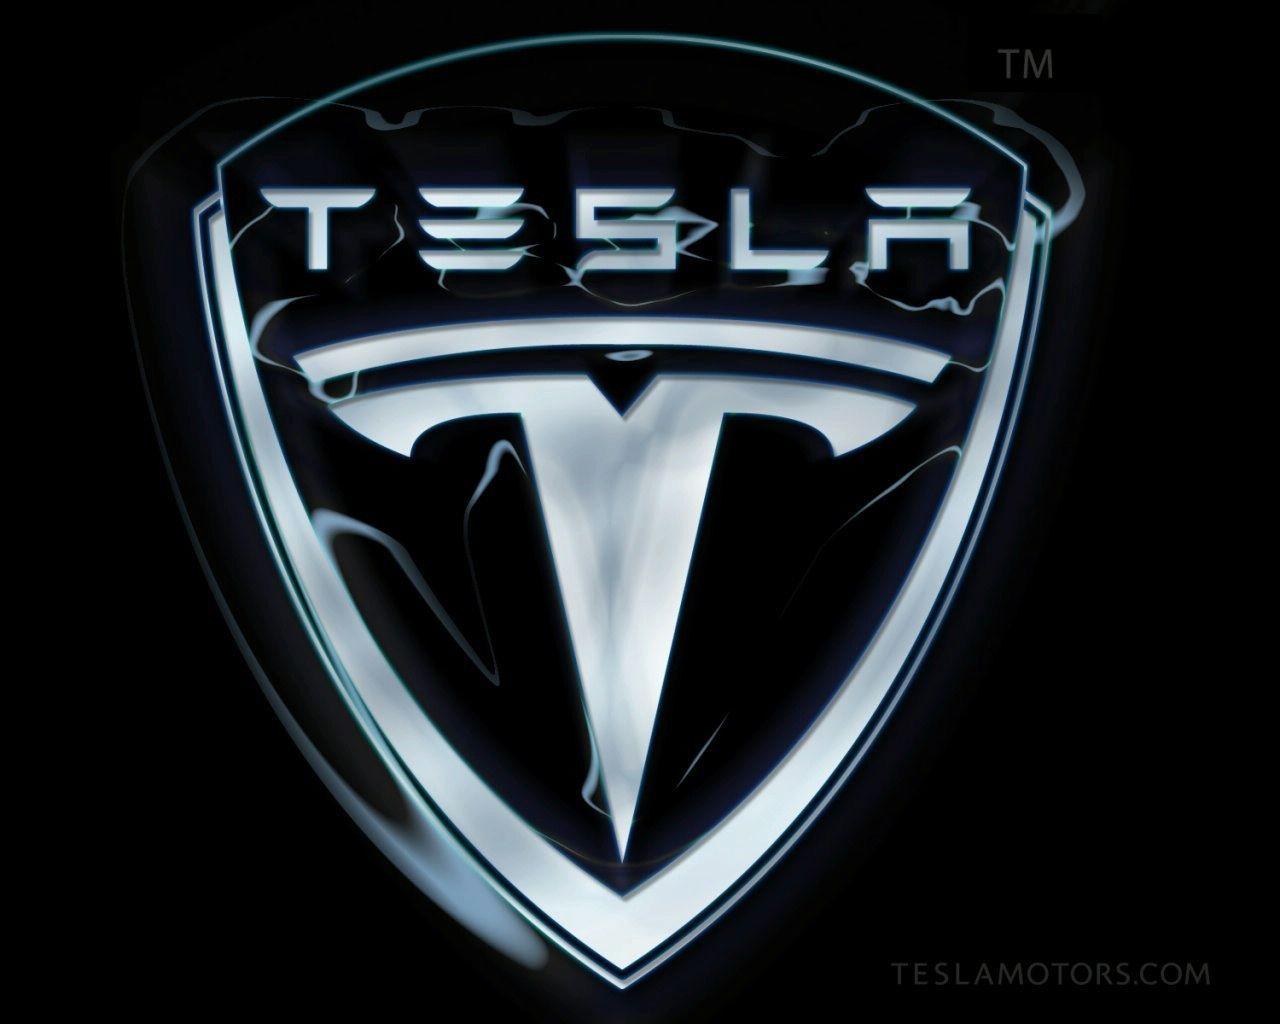 Tesla Vehicle Logo - Tesla Motors Logo | Automotive | Pinterest | Tesla motors, Cars and ...